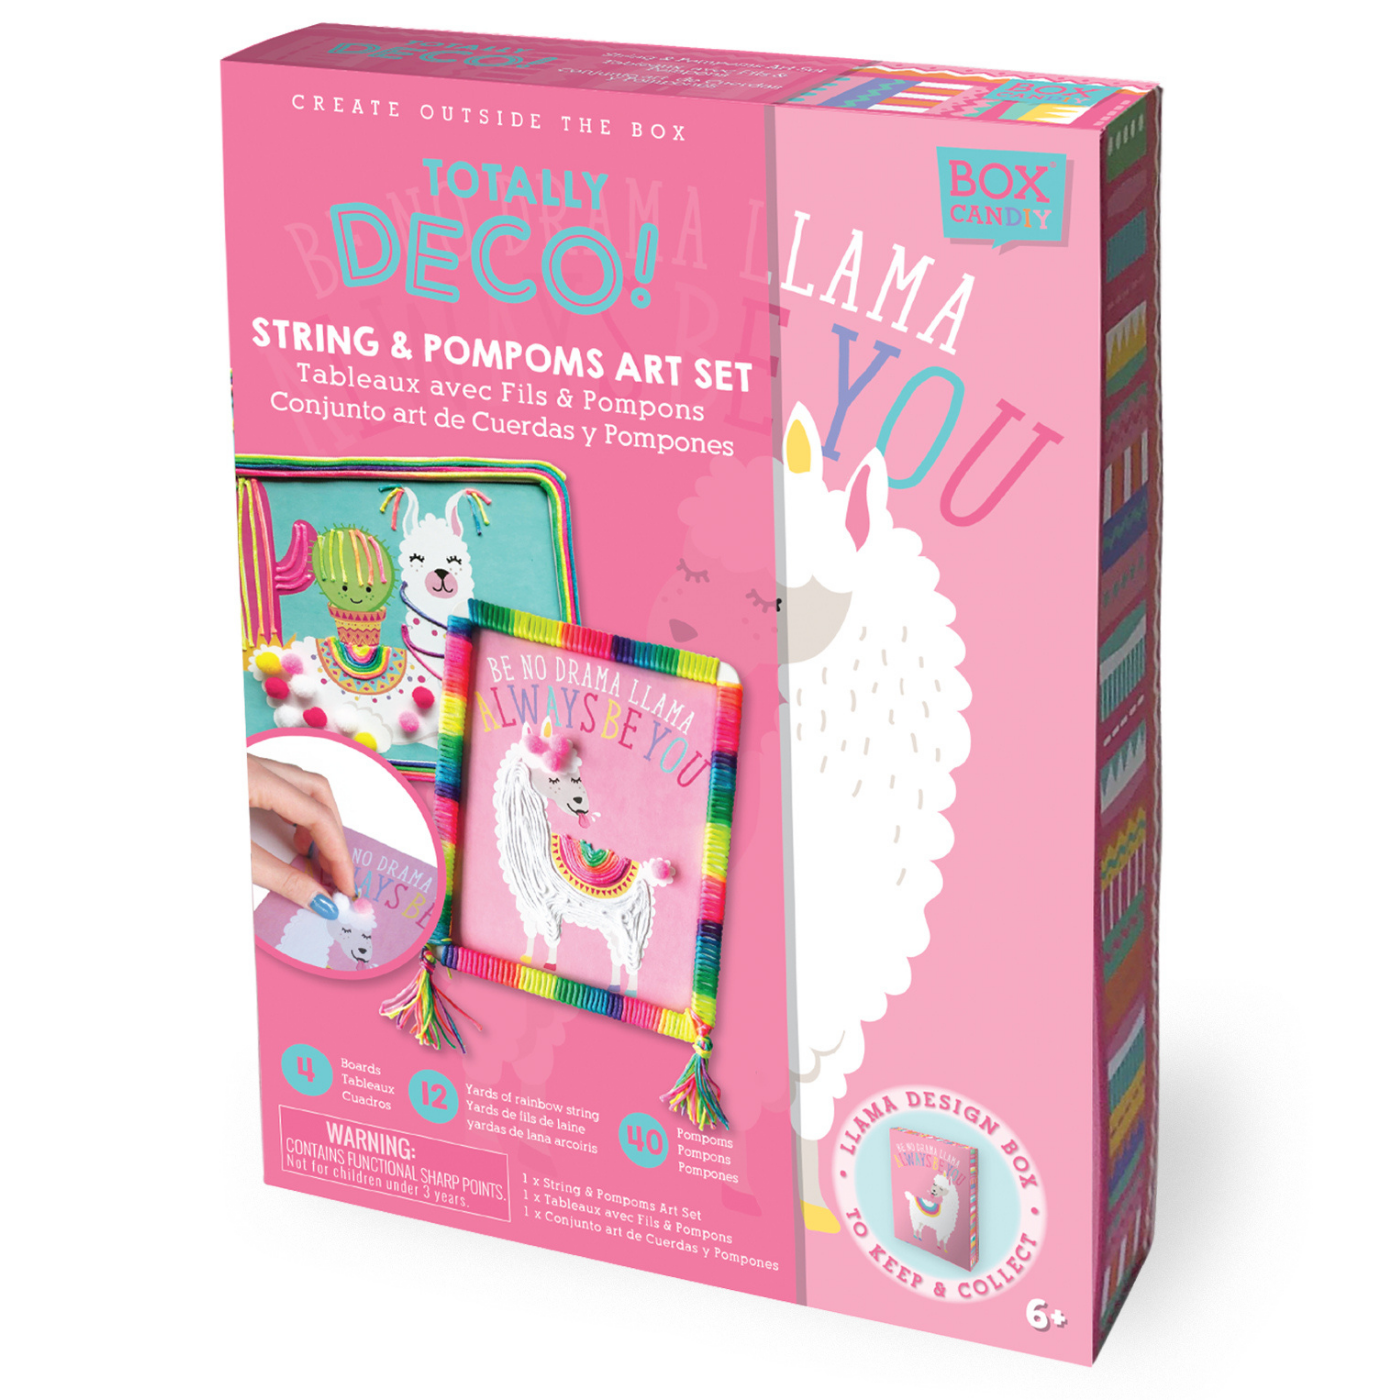 Totally Deco! String & Pompoms Art Set – BOX CANDIY